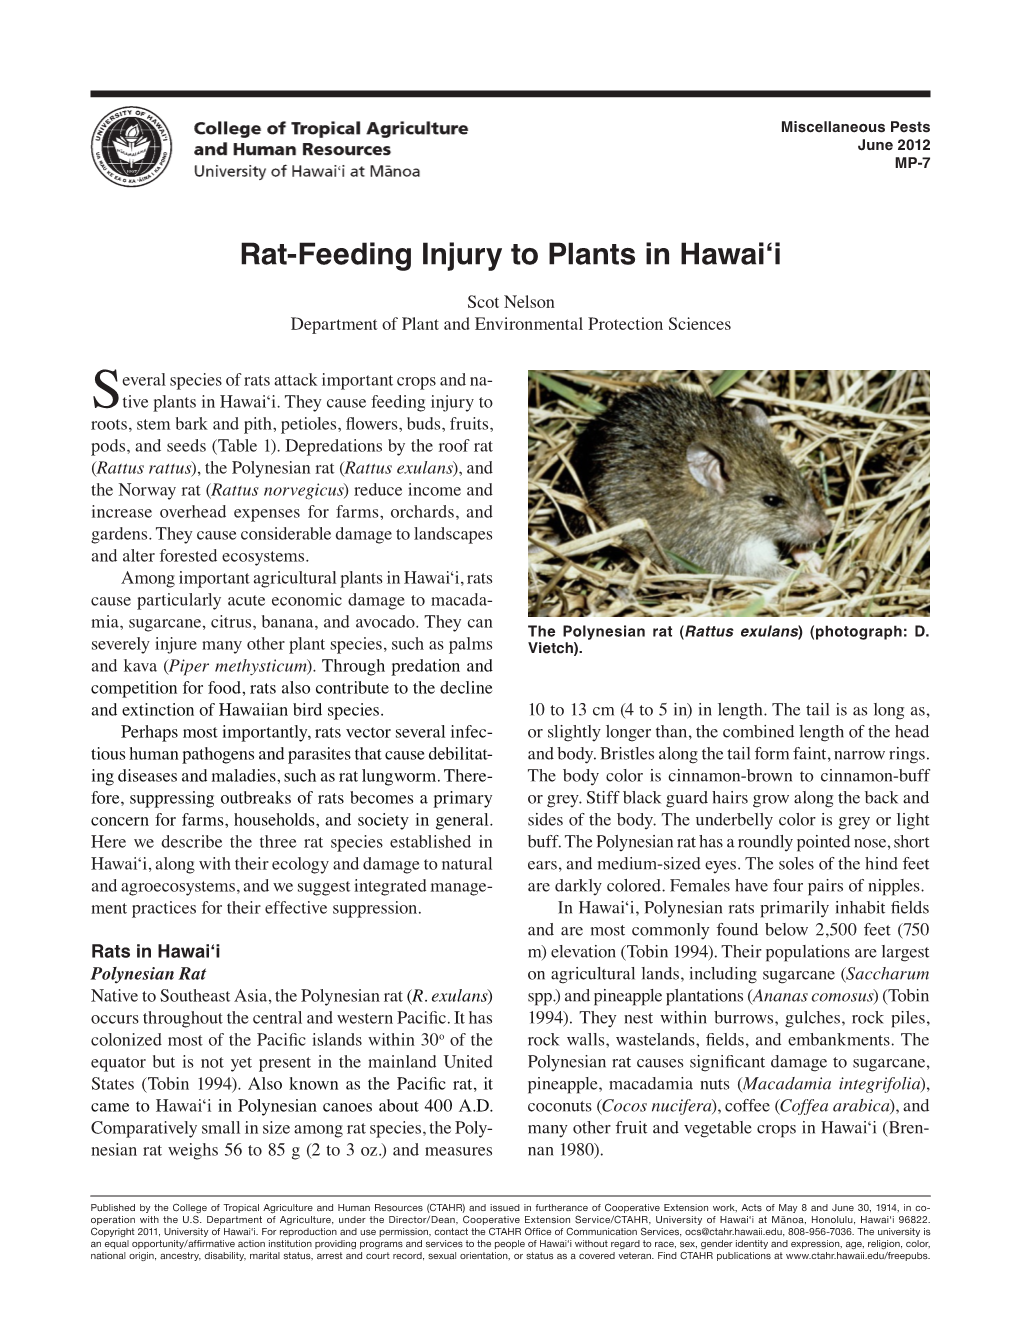 Rat-Feeding Injury to Plants in Hawai'i